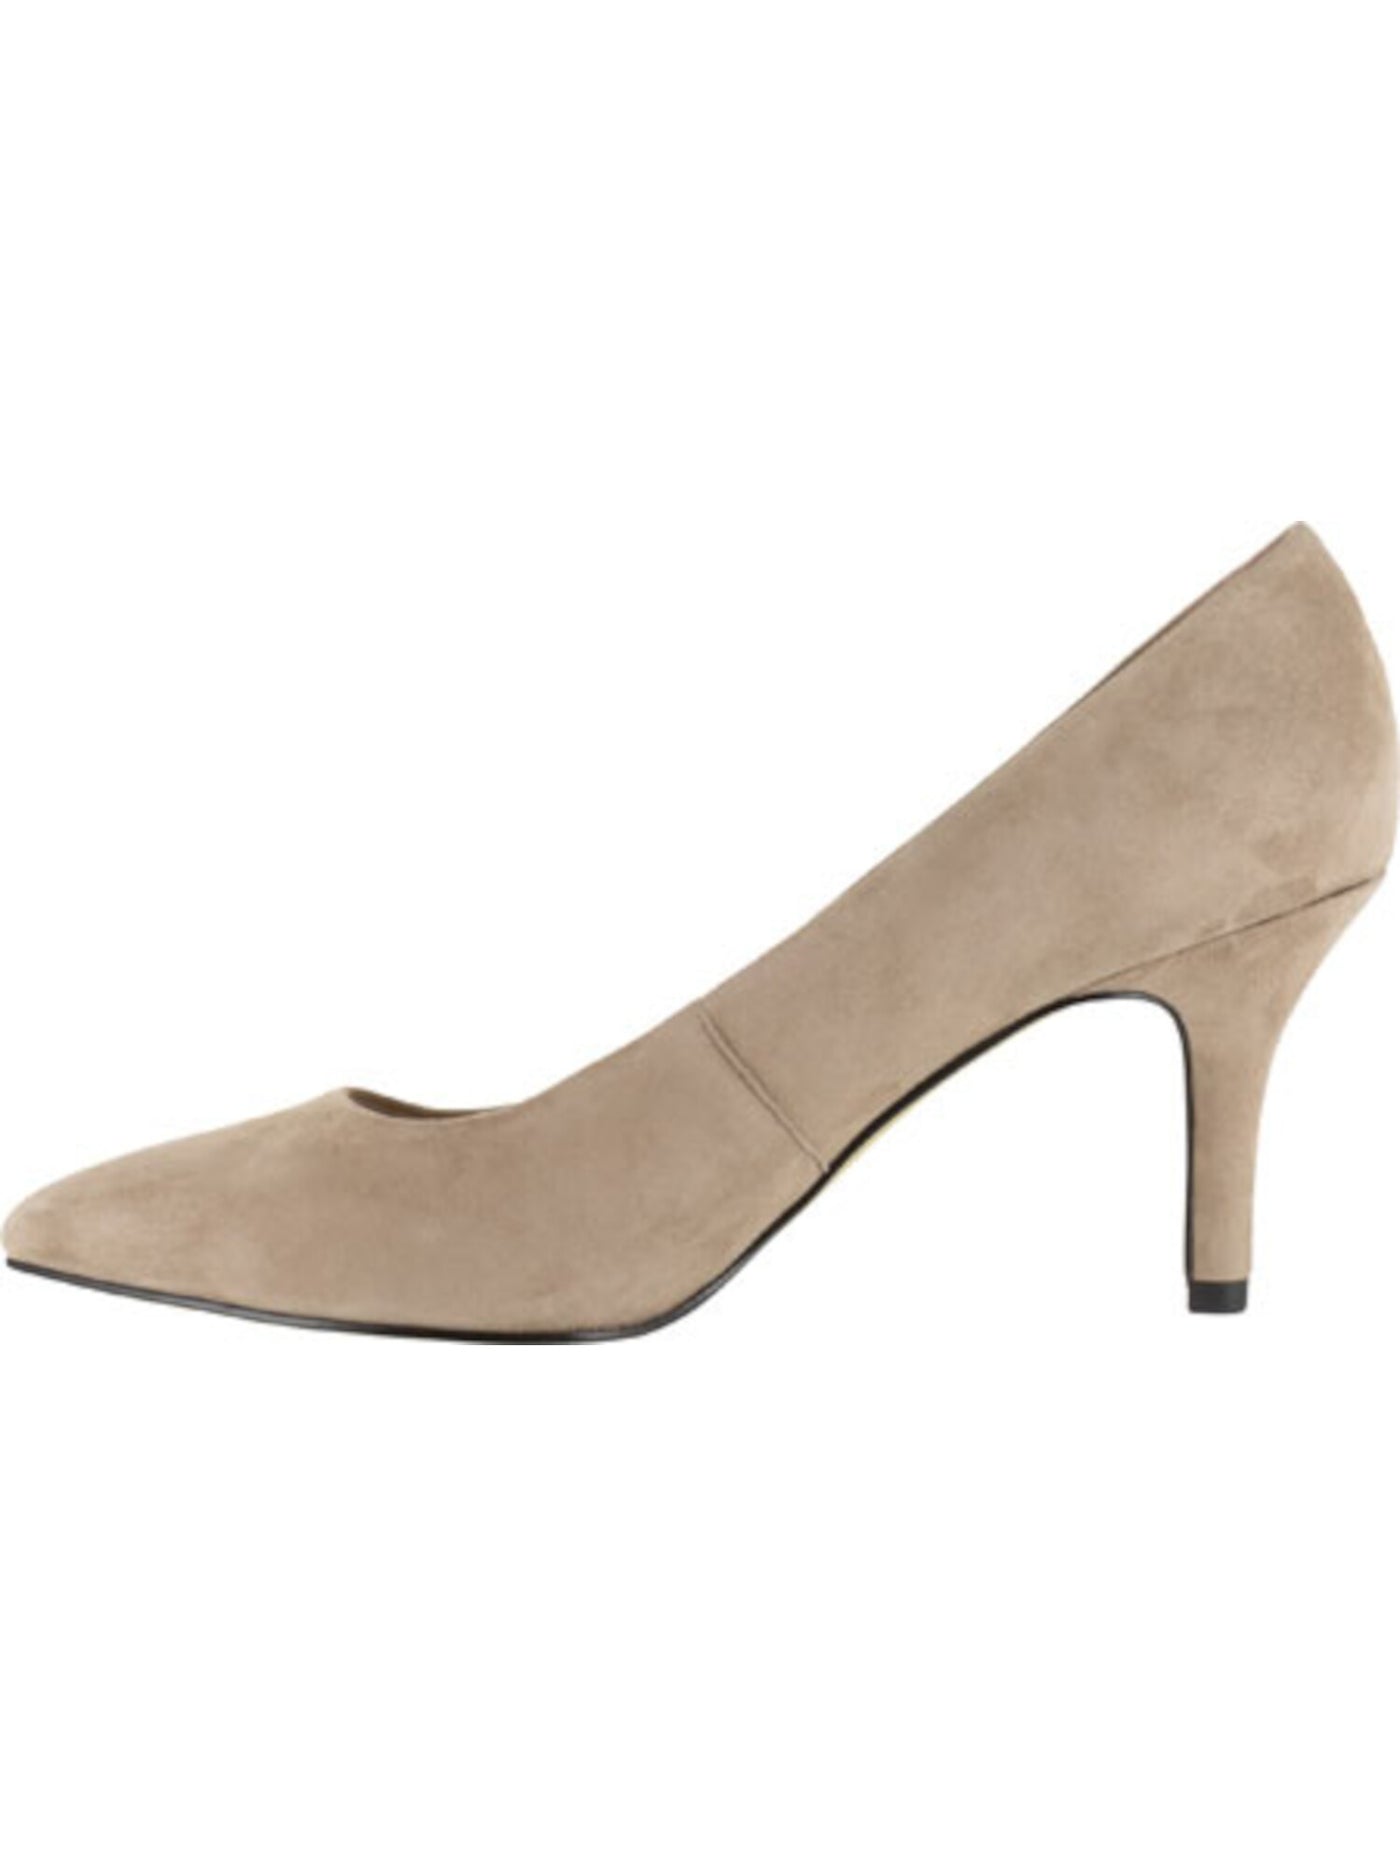 BELLA VITA Womens Beige Padded Define Pointed Toe Stiletto Slip On Leather Dress Pumps Shoes 11